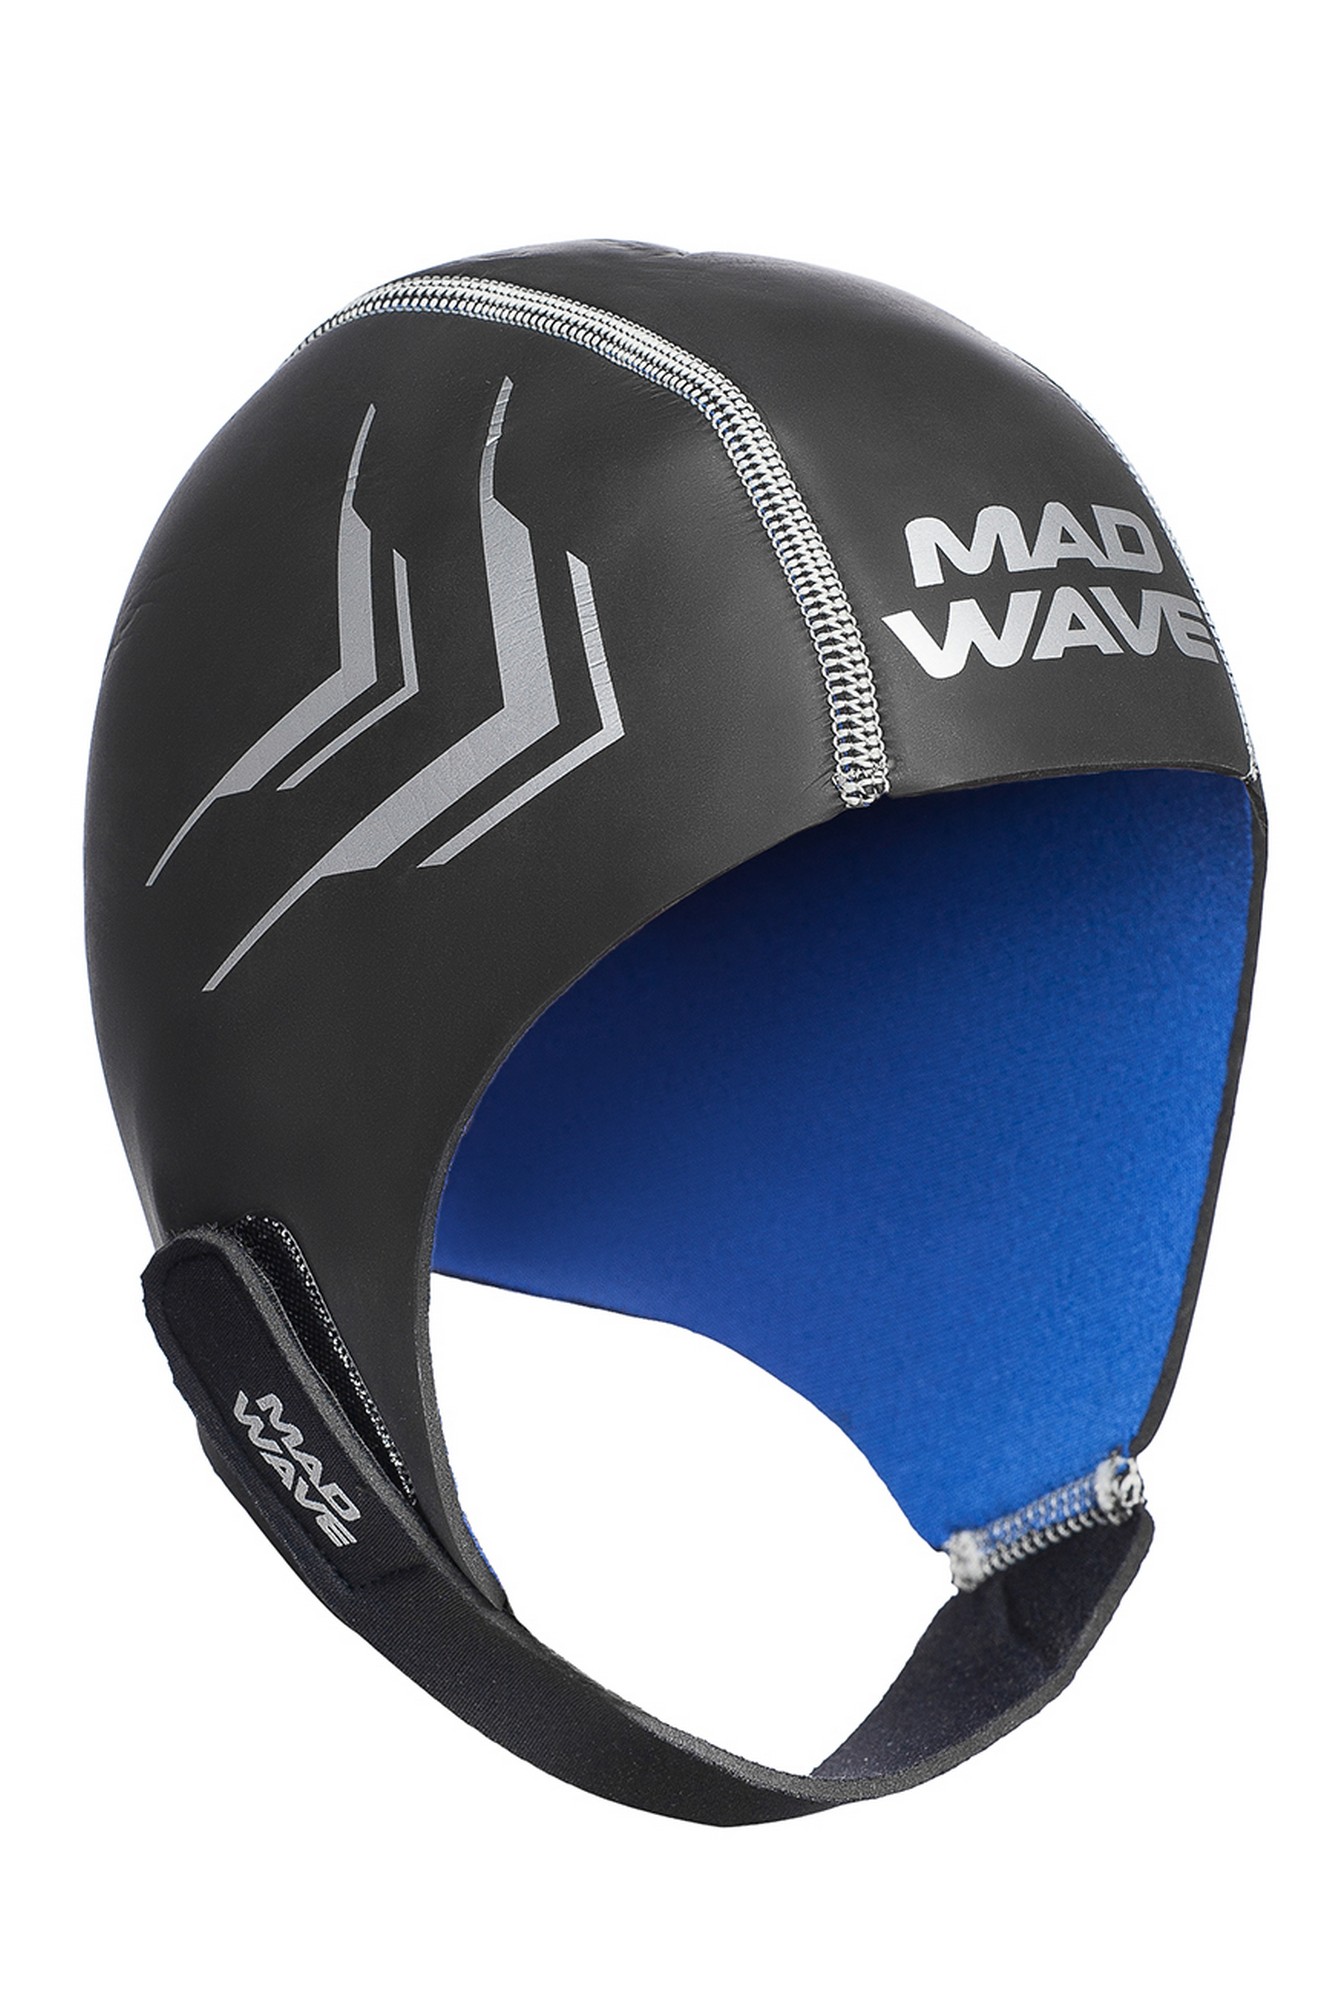   Mad Wave Helmet M2049 02 3 01W 